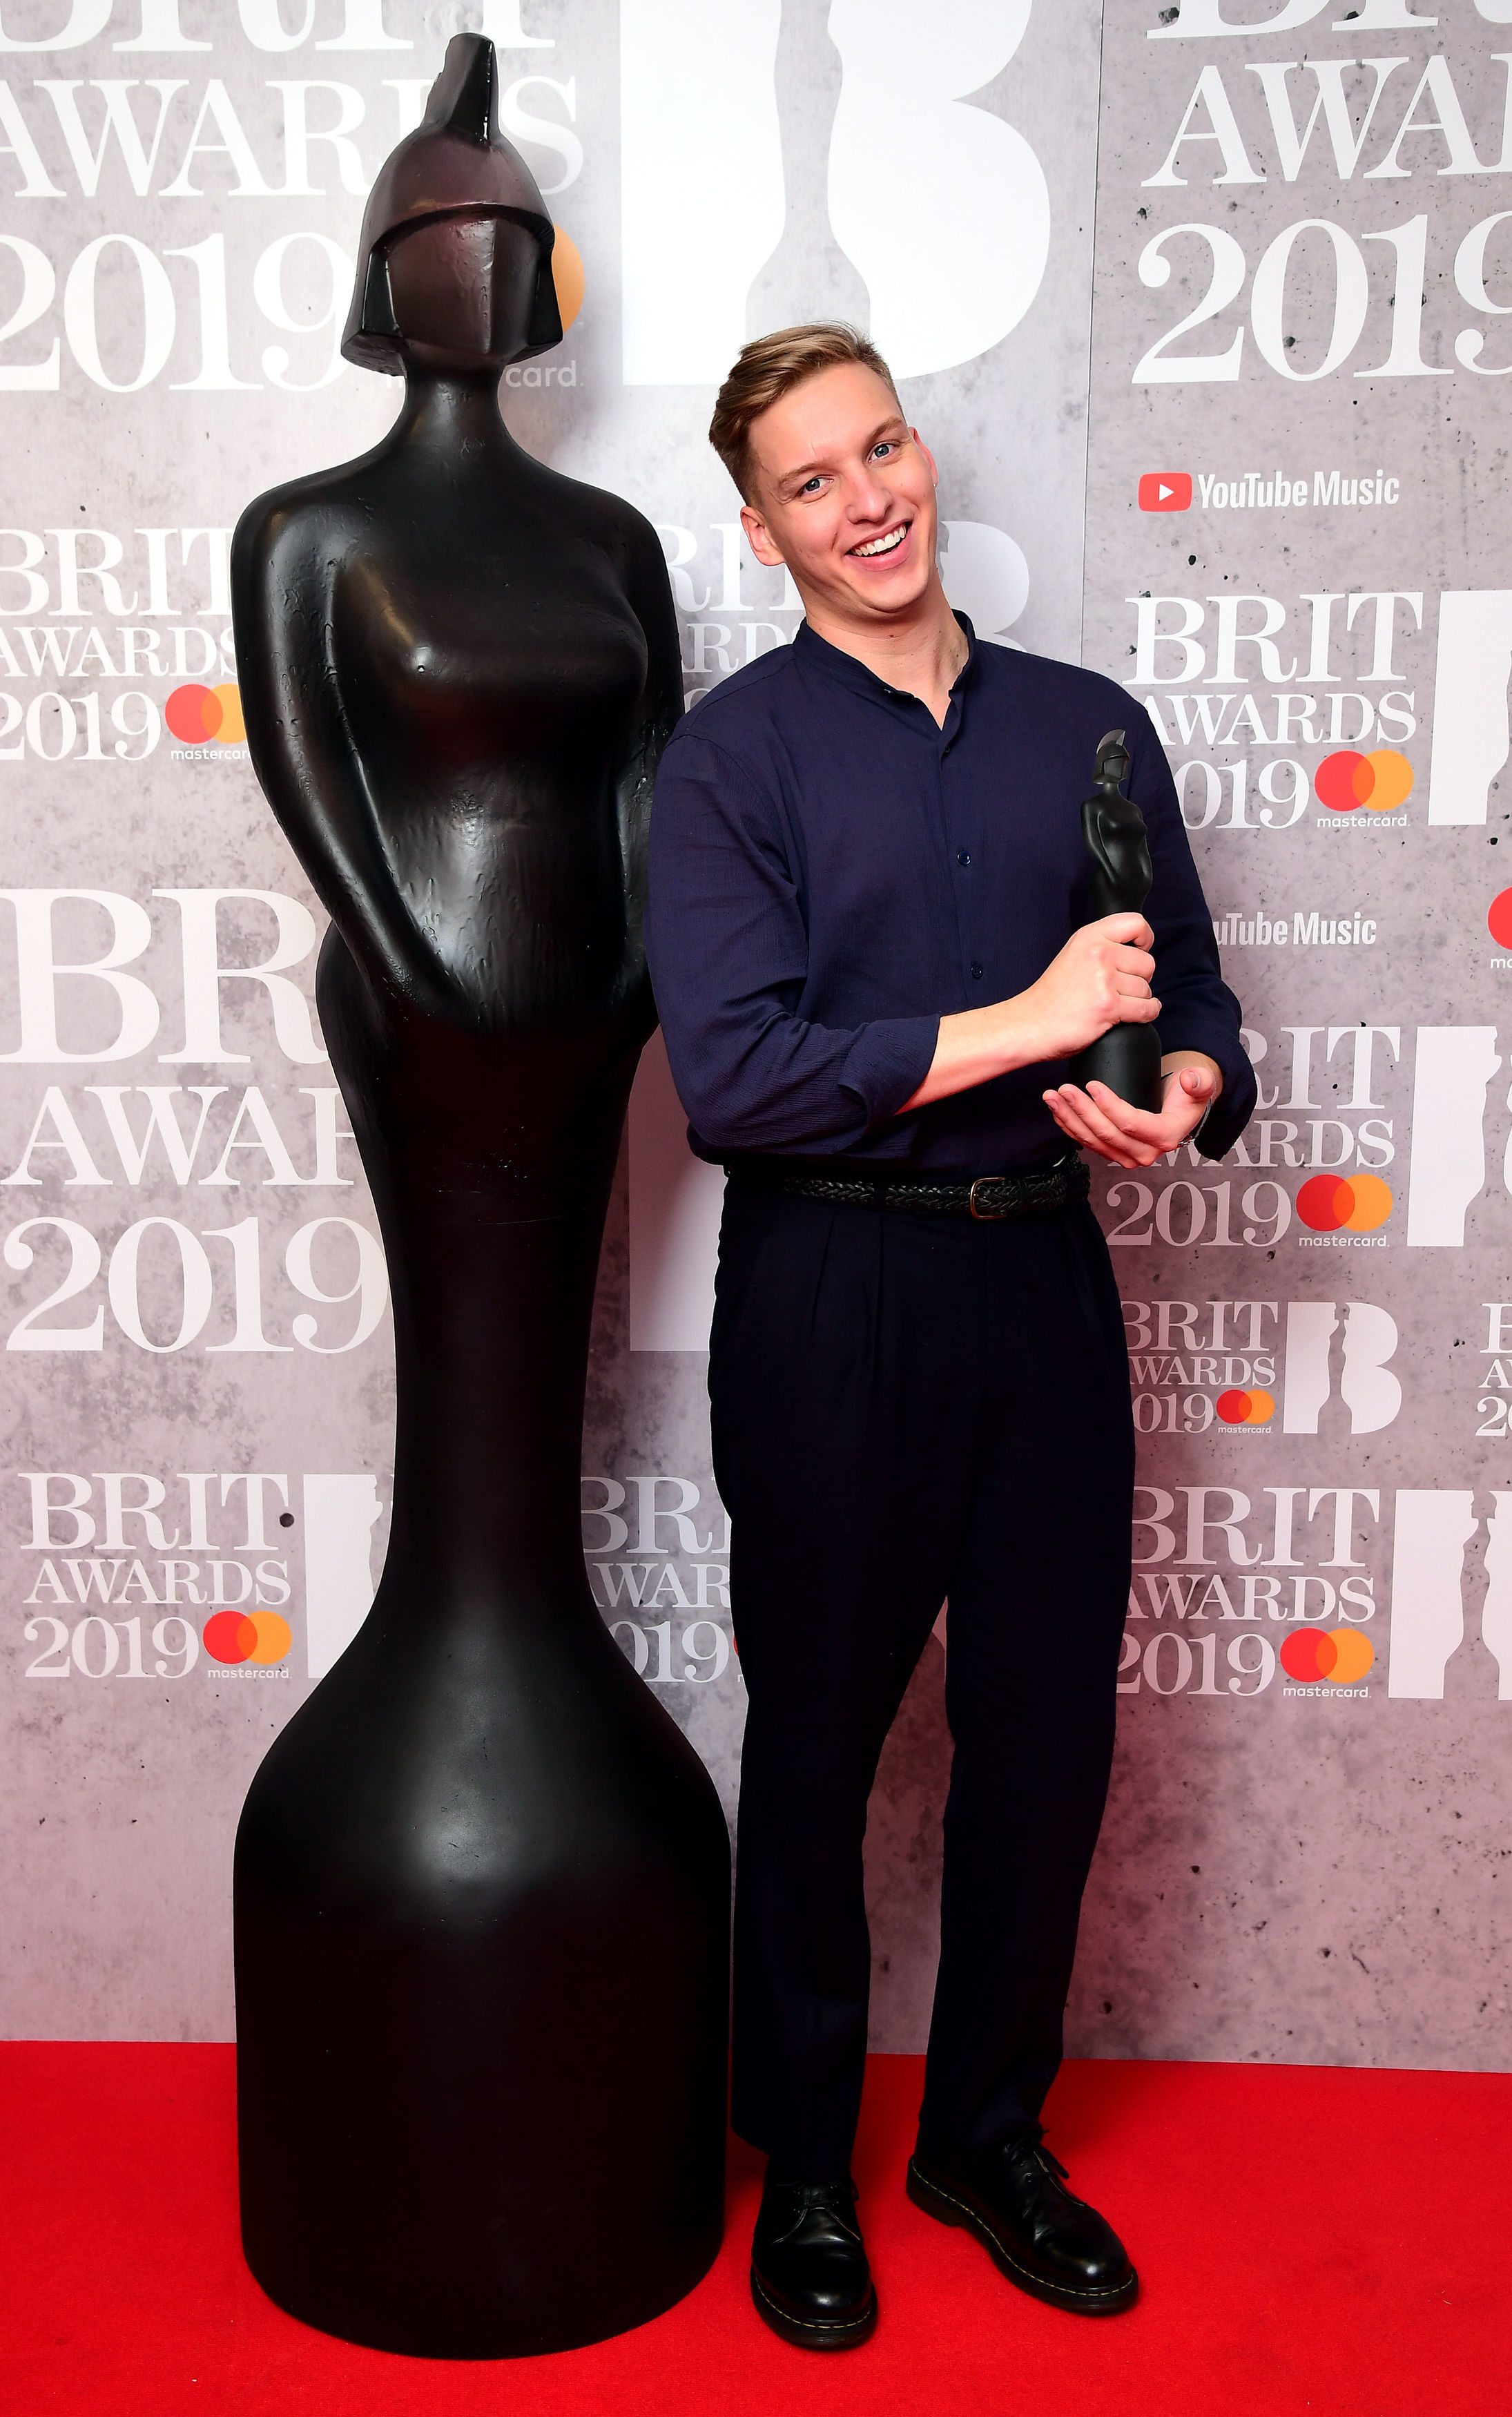 George Ezra with his Best British Male Solo Artist Brit Award